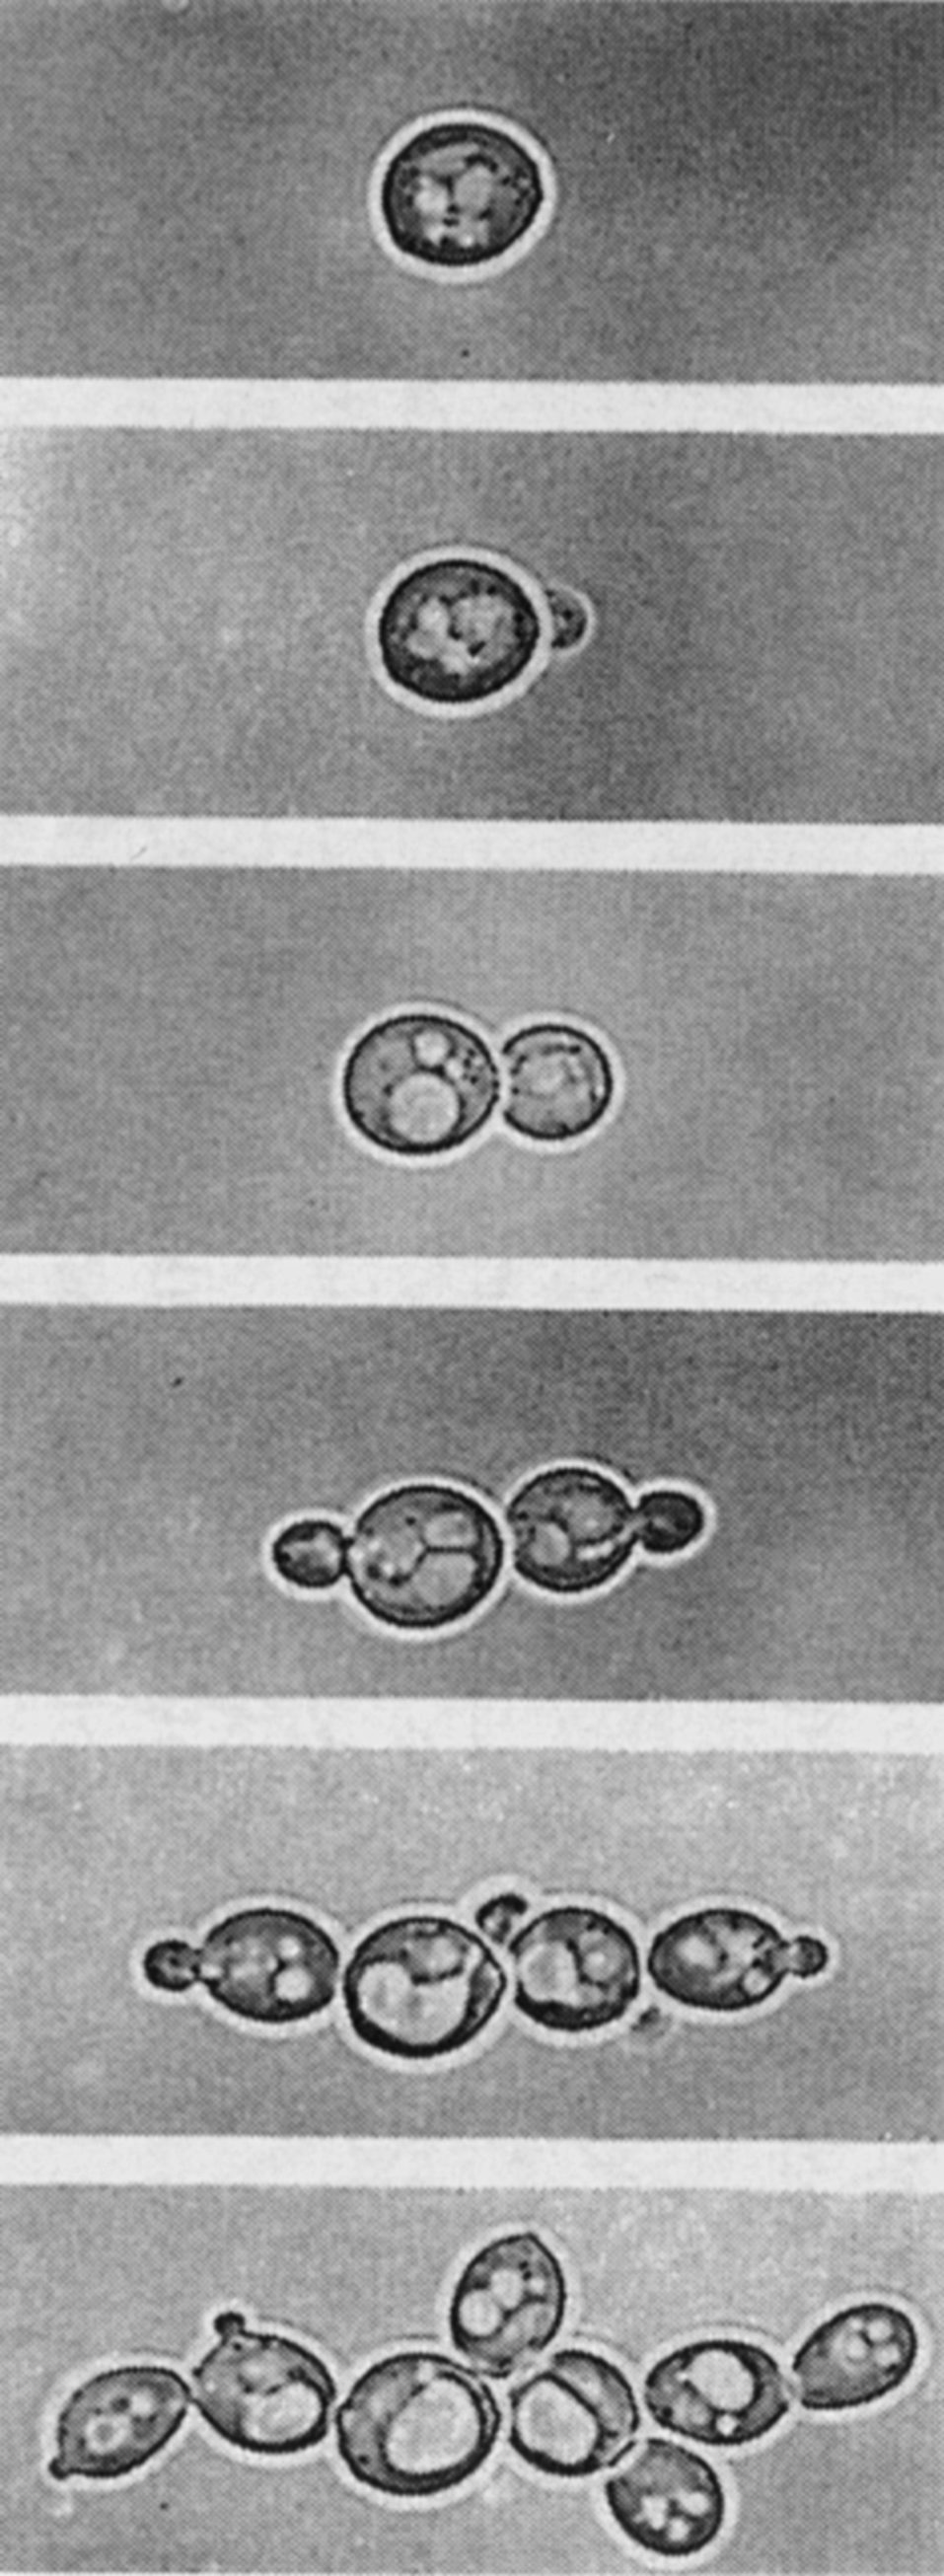 Рис. 5. Рост дрожжей (Saccharomyces cerevisiae) путем почкования